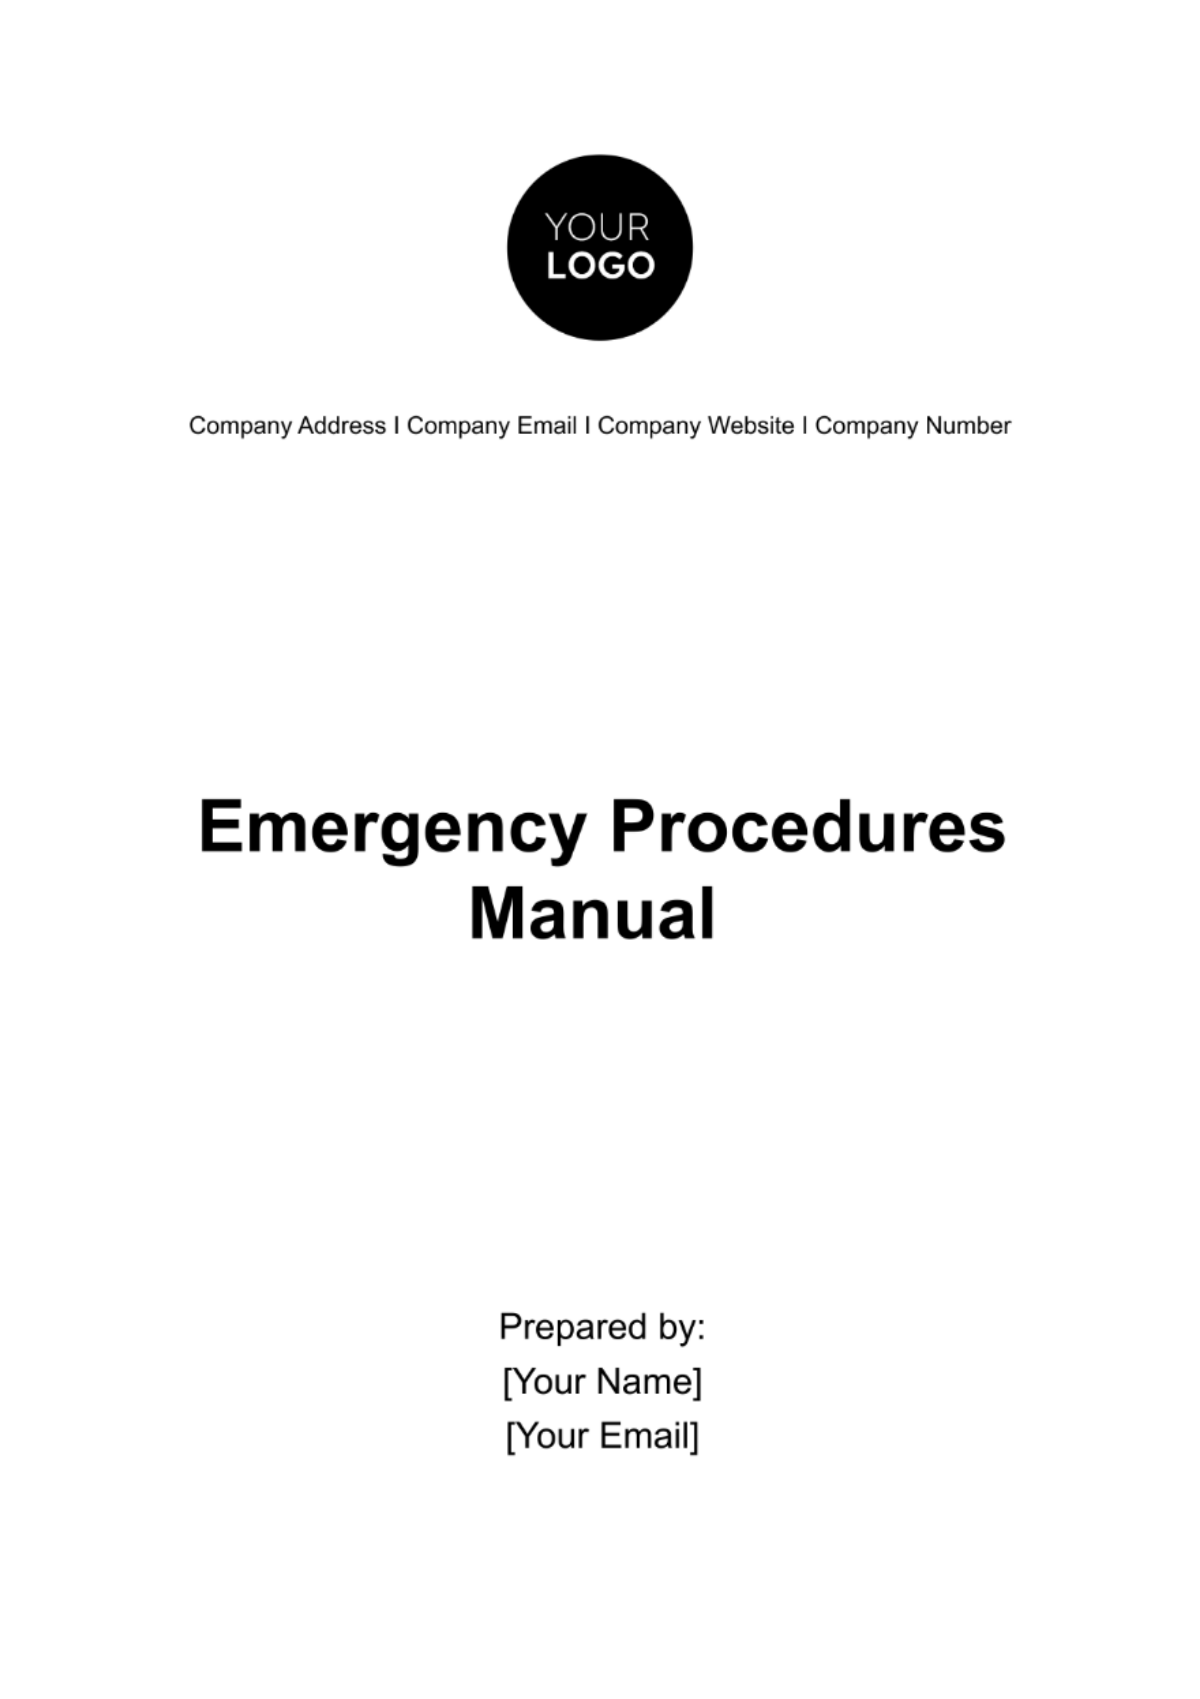 Emergency Procedures Manual Template